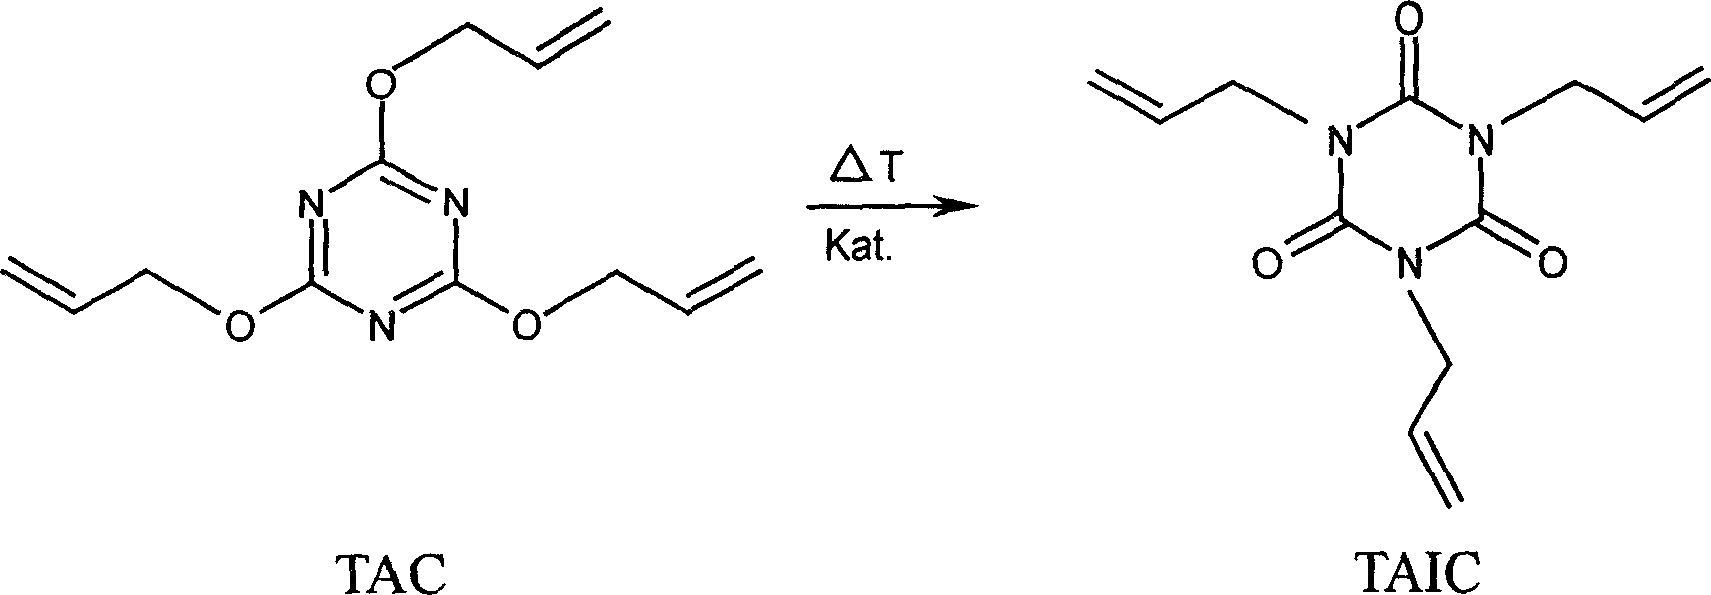 Method for preparing triallyl isocyanurate